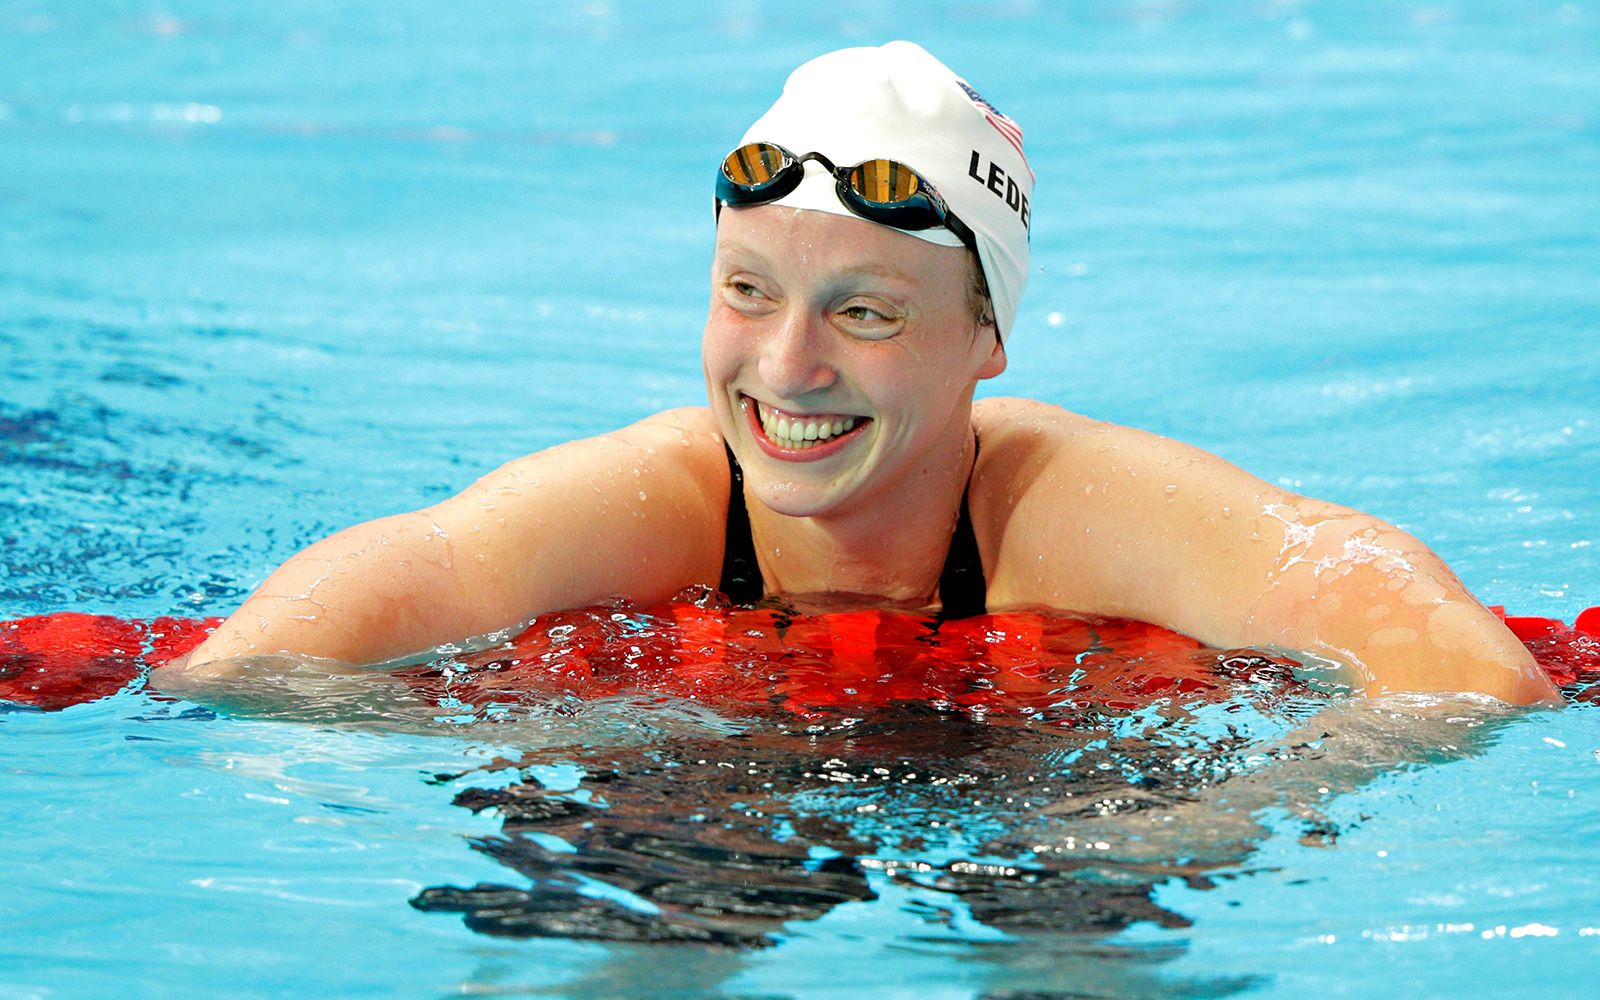 What Makes Olympic Swimmer Katie Ledecky So Remarkable